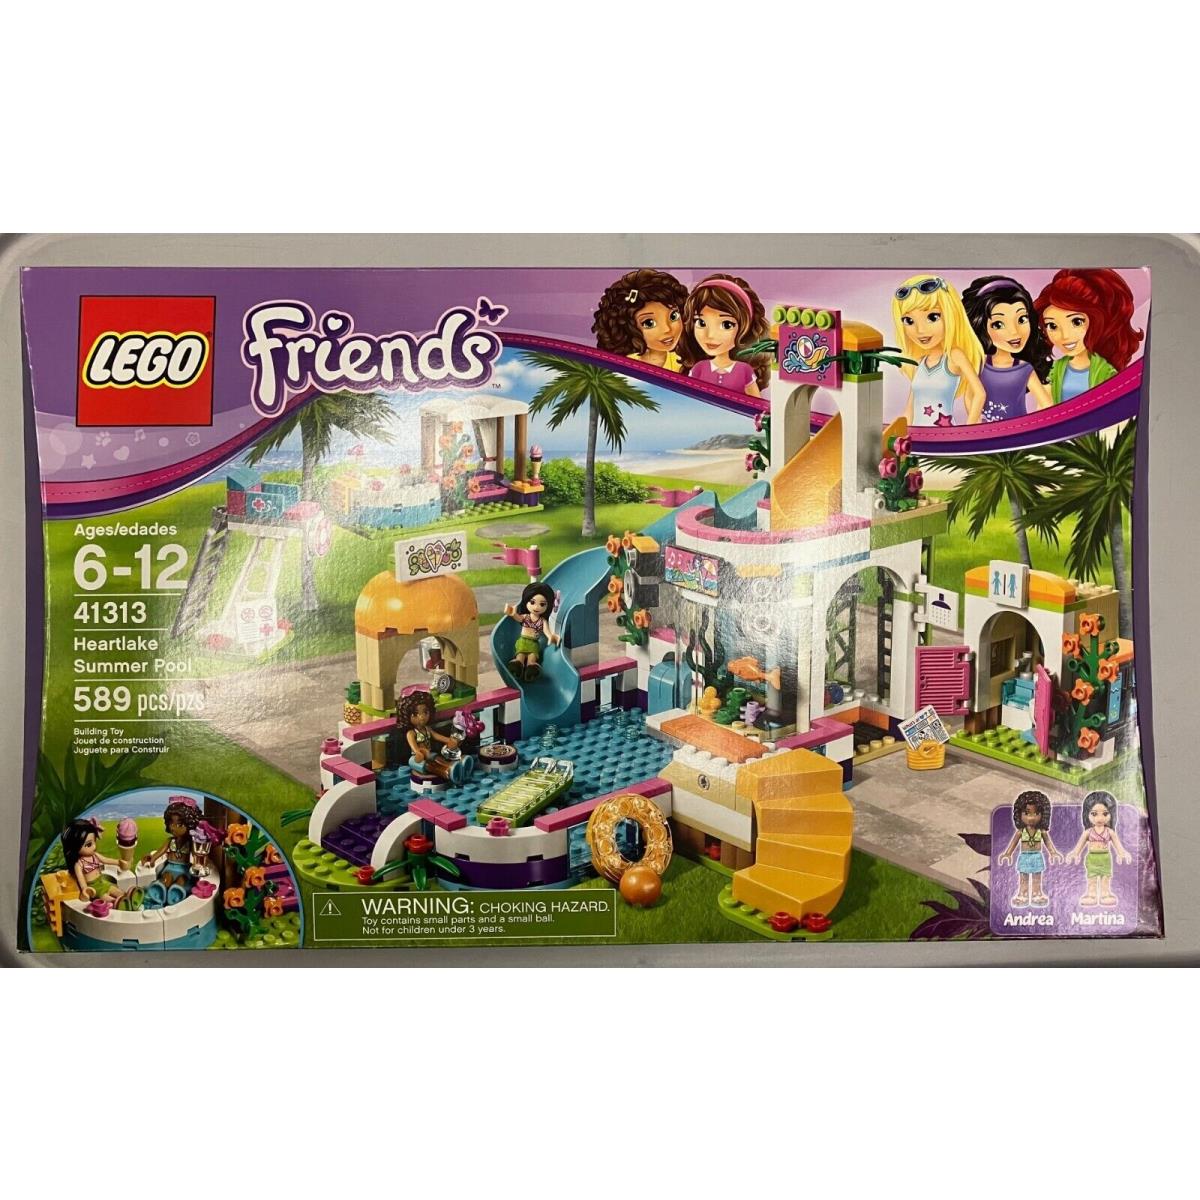 Lego 41313 Friends Heartlake Summer Pool 589 Pcs Andrea Martina Retired